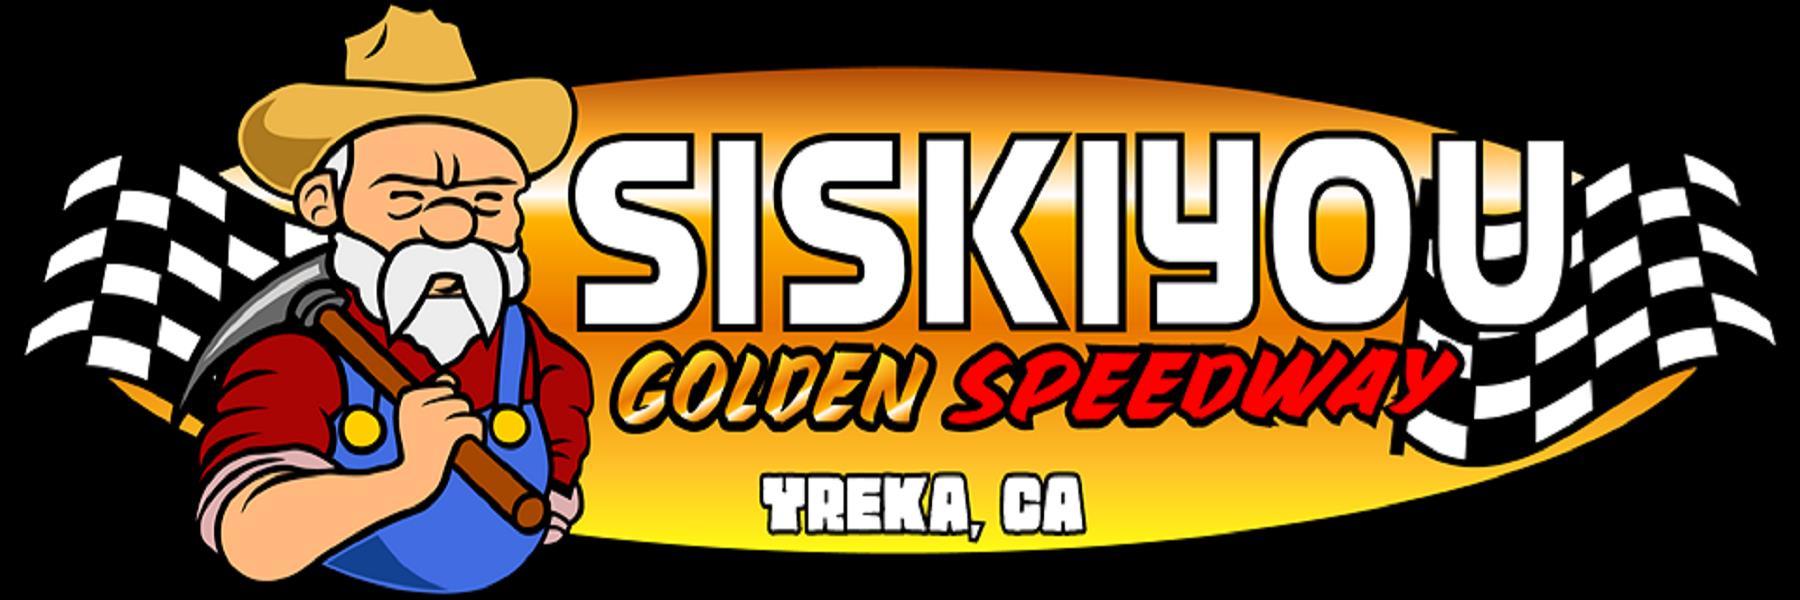 5/28/2022 - Siskiyou Golden Speedway